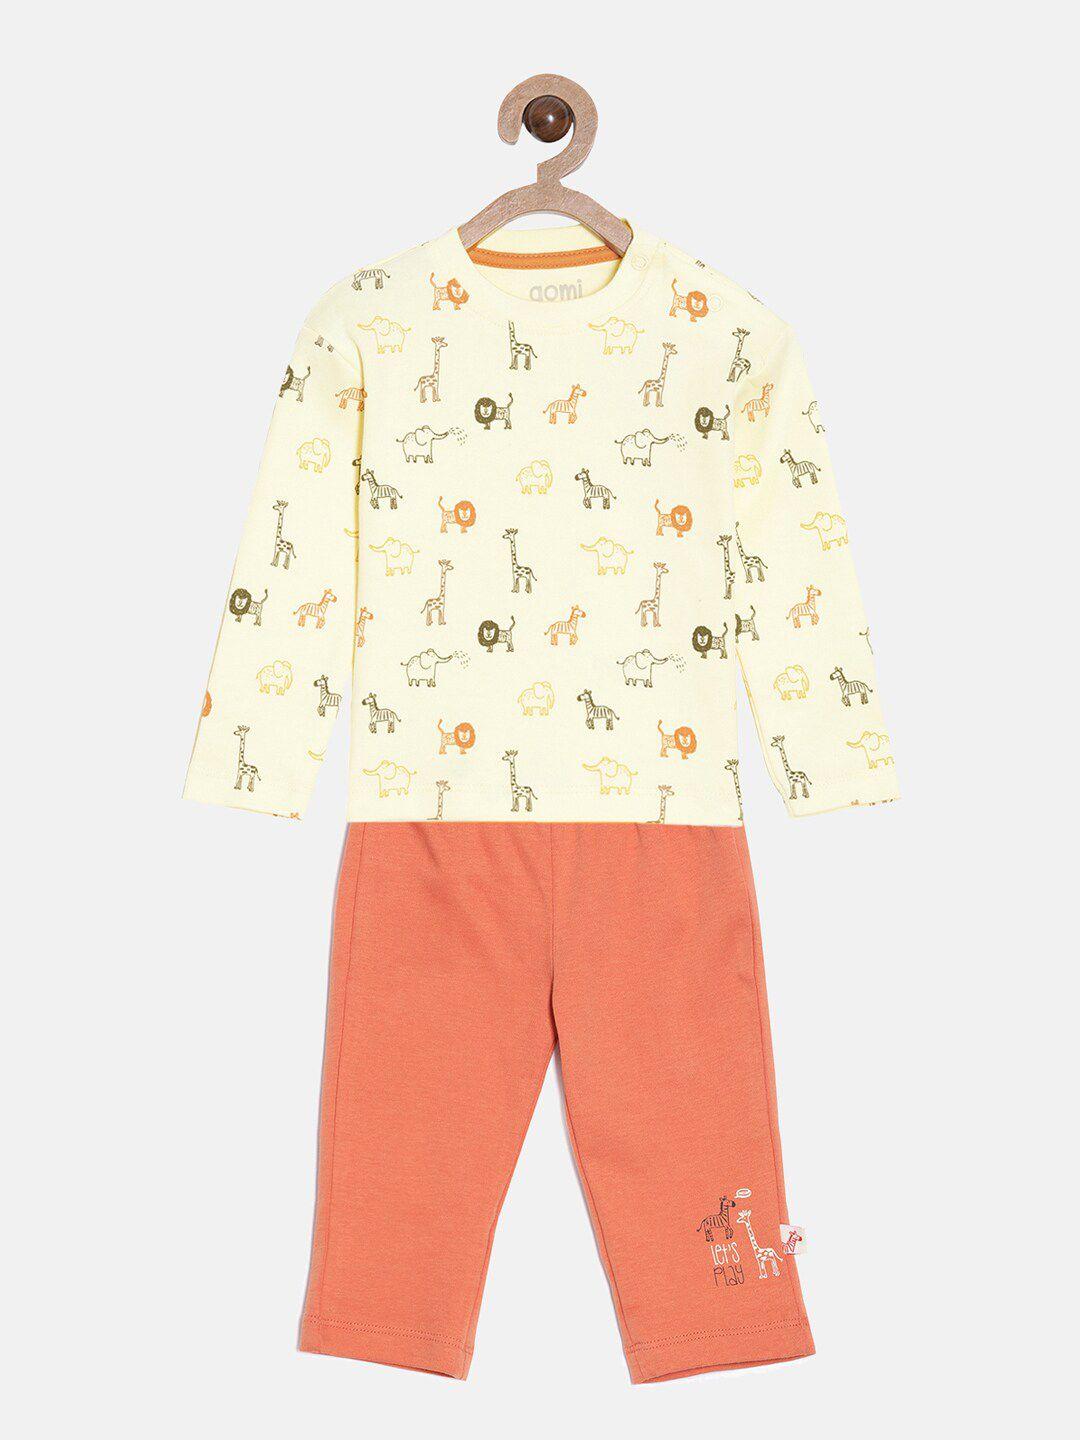 Aomi Boys Mustard & Peach-Coloured Printed T-shirt with Pyjama Set